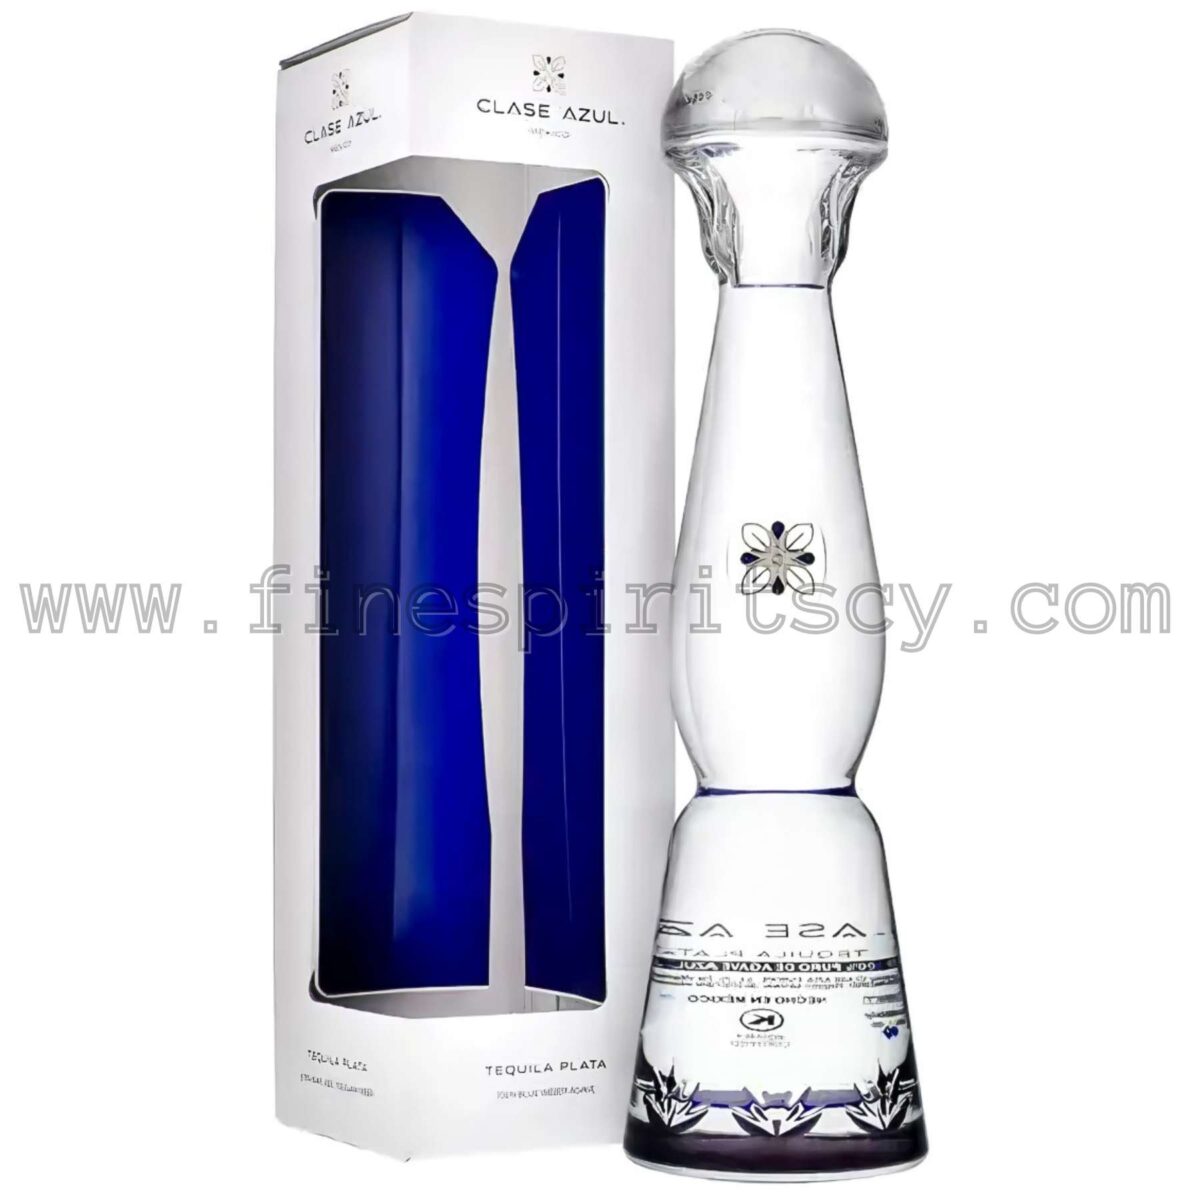 Clase Azul Plata Mexico Agave Weber Premium Tequila Europe Fine Spirits CY